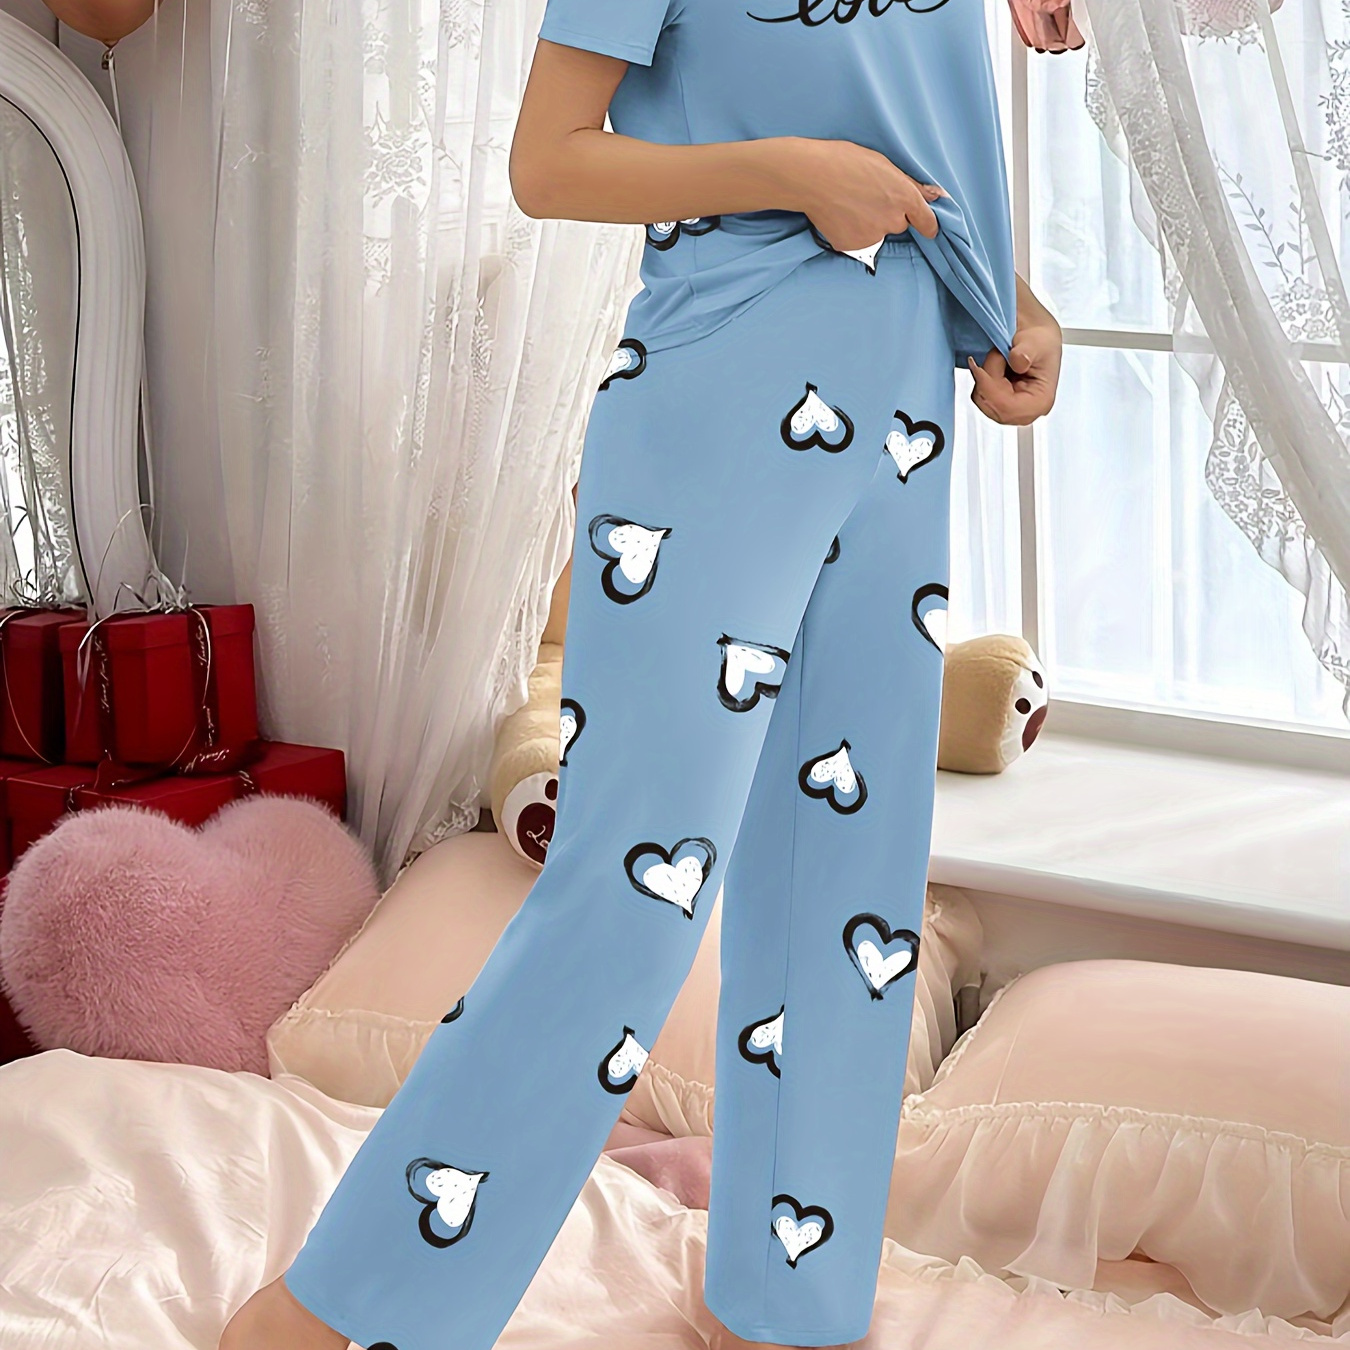 

Heart & Letter Print Pajama Set, Casual Short Sleeve Round Neck Top & Elastic Pants, Women's Sleepwear